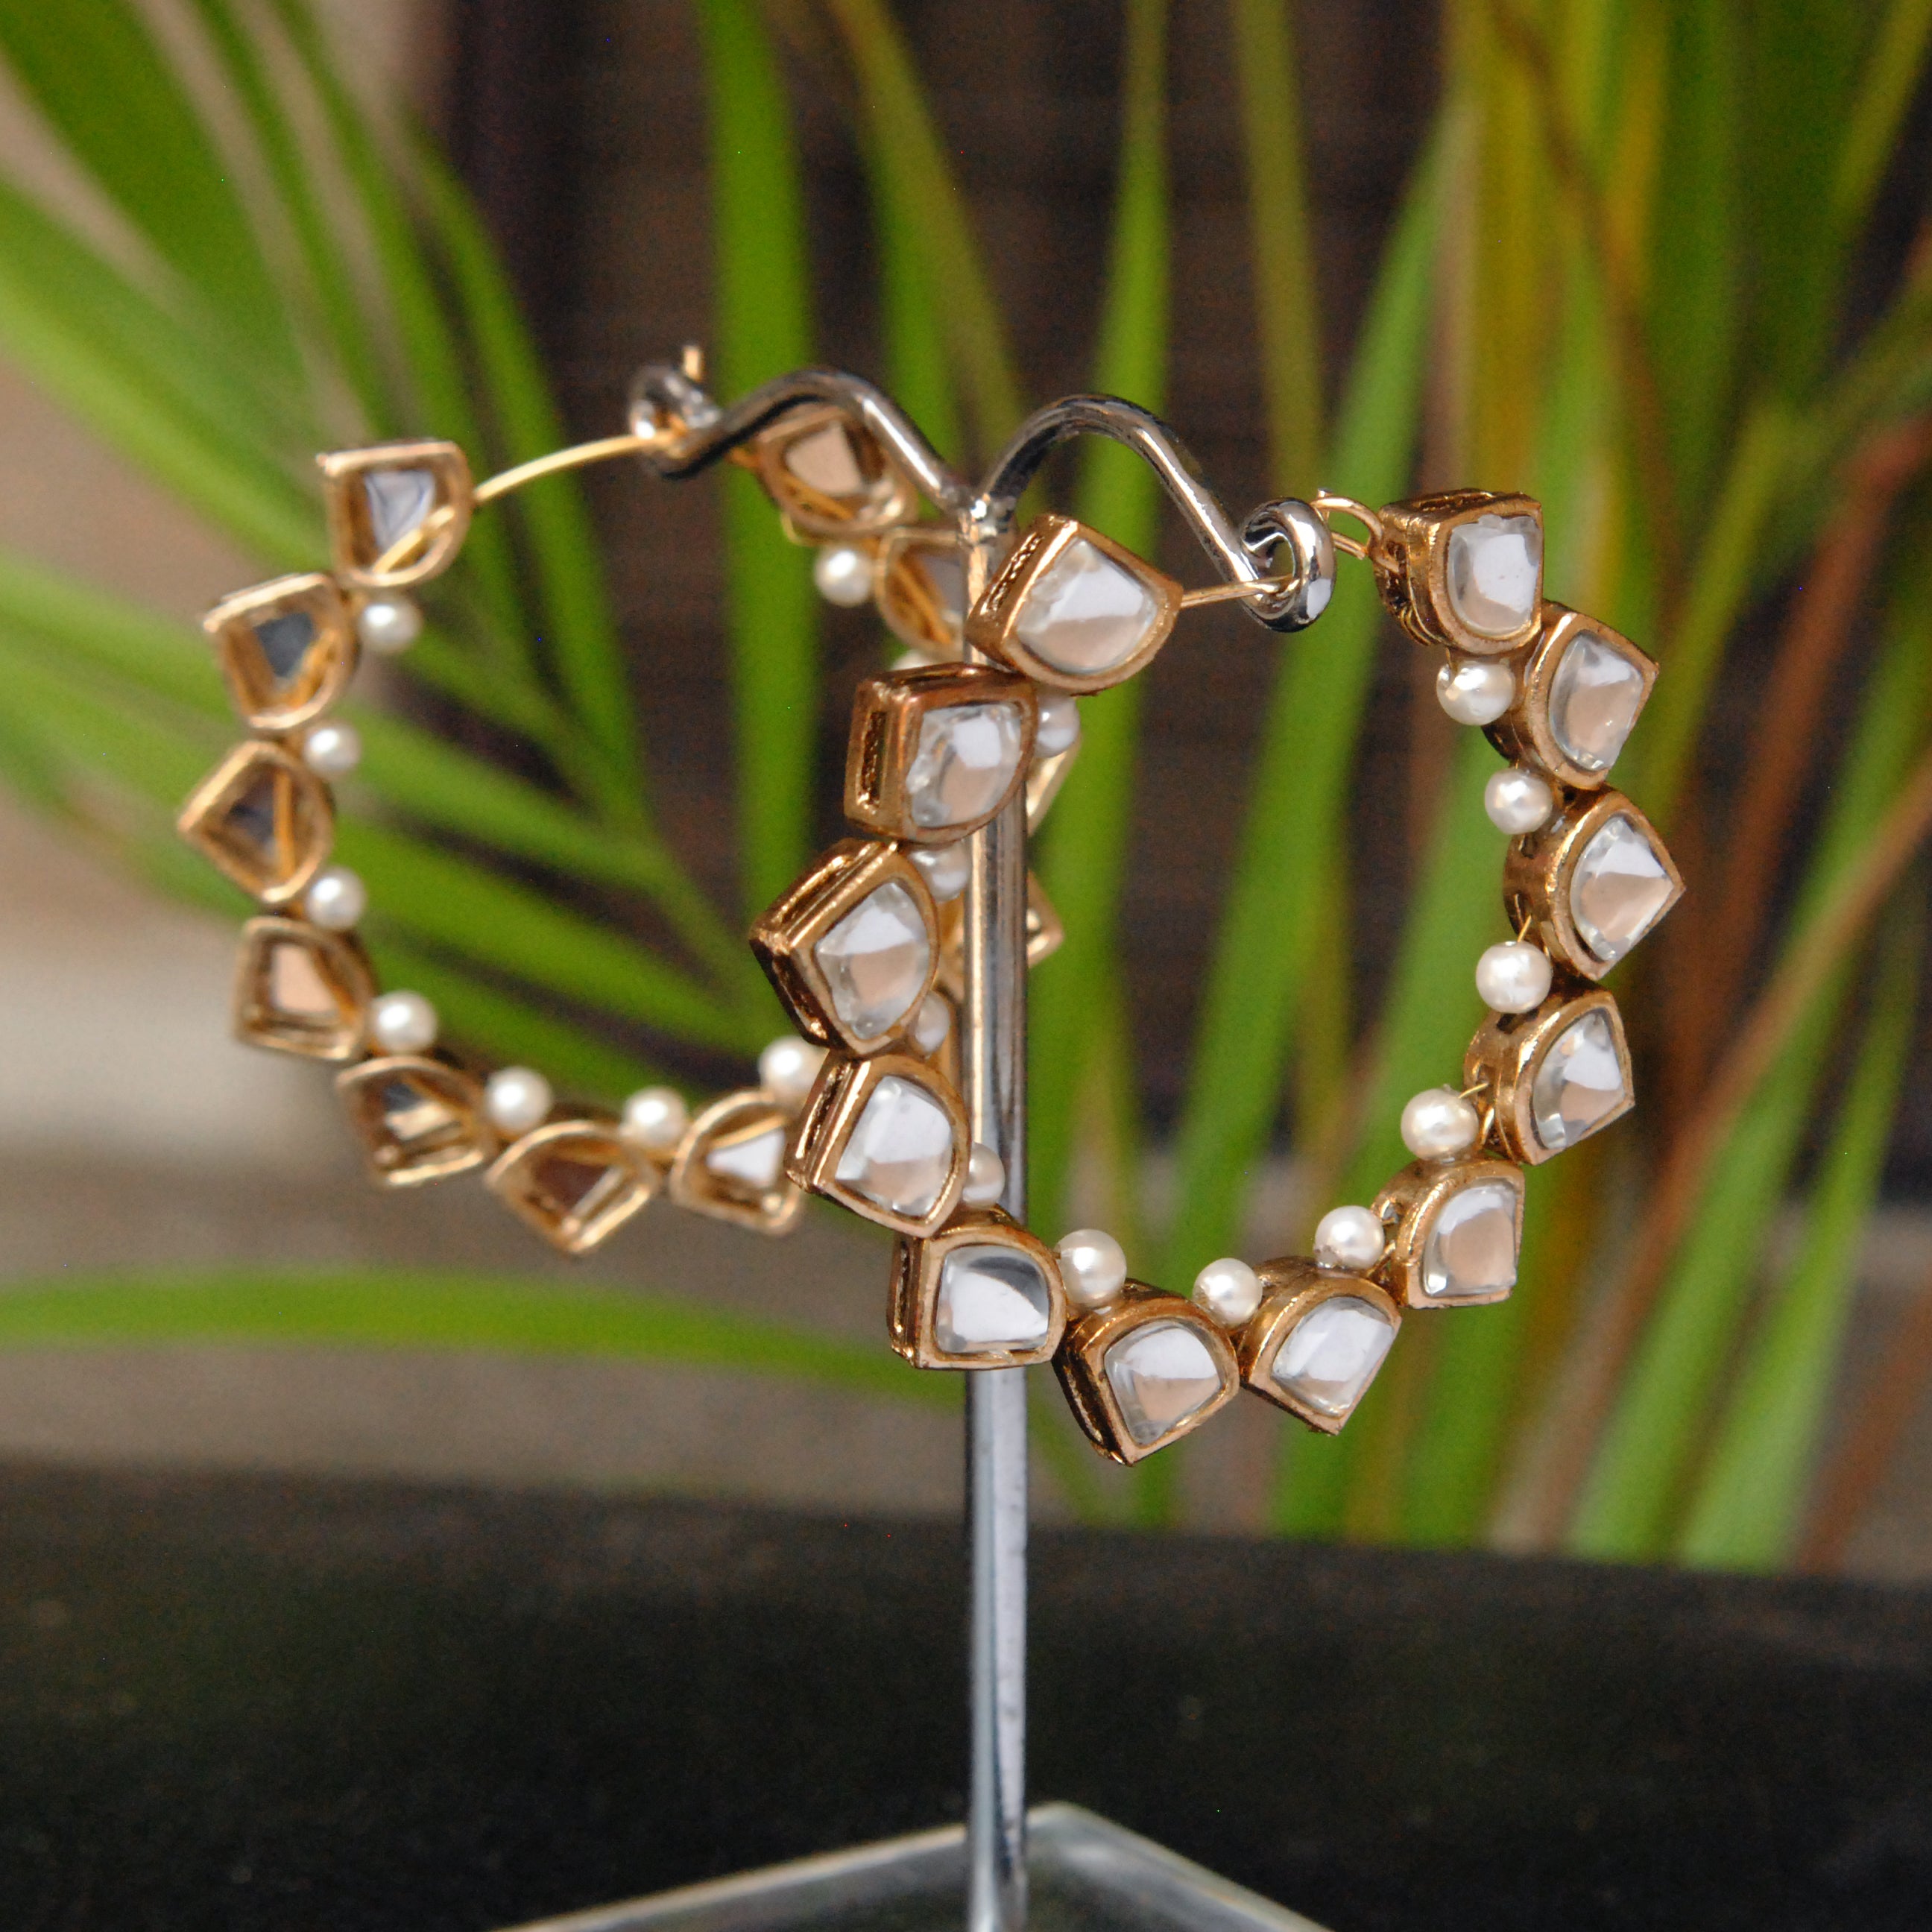 Beabhika Kundan Hoops Earrings Handmade White Pearls Earrings Designer Hoop Earrings Jewelry For Matching Ethnic Suit Saree Jewelry Lightweight Earrings Daily Wear Party Wear Jewelry Online Cash On Delivery